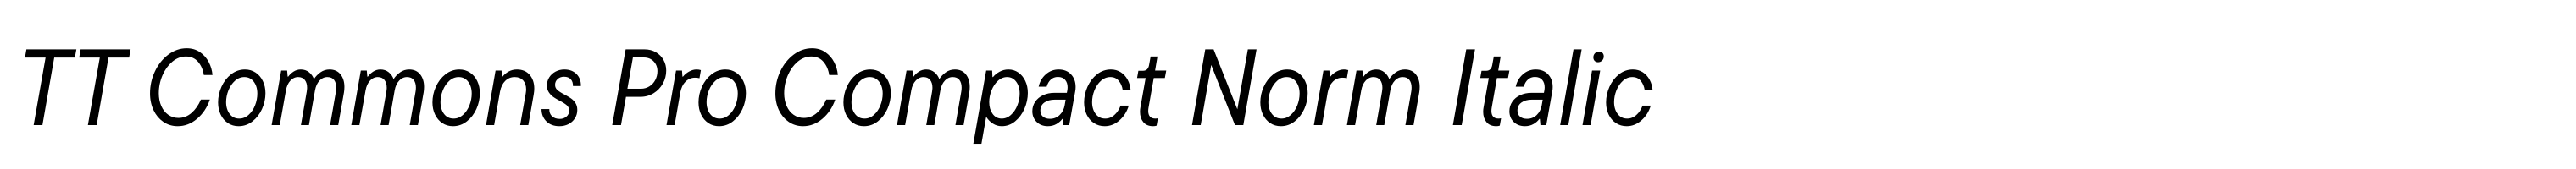 TT Commons Pro Compact Norm Italic